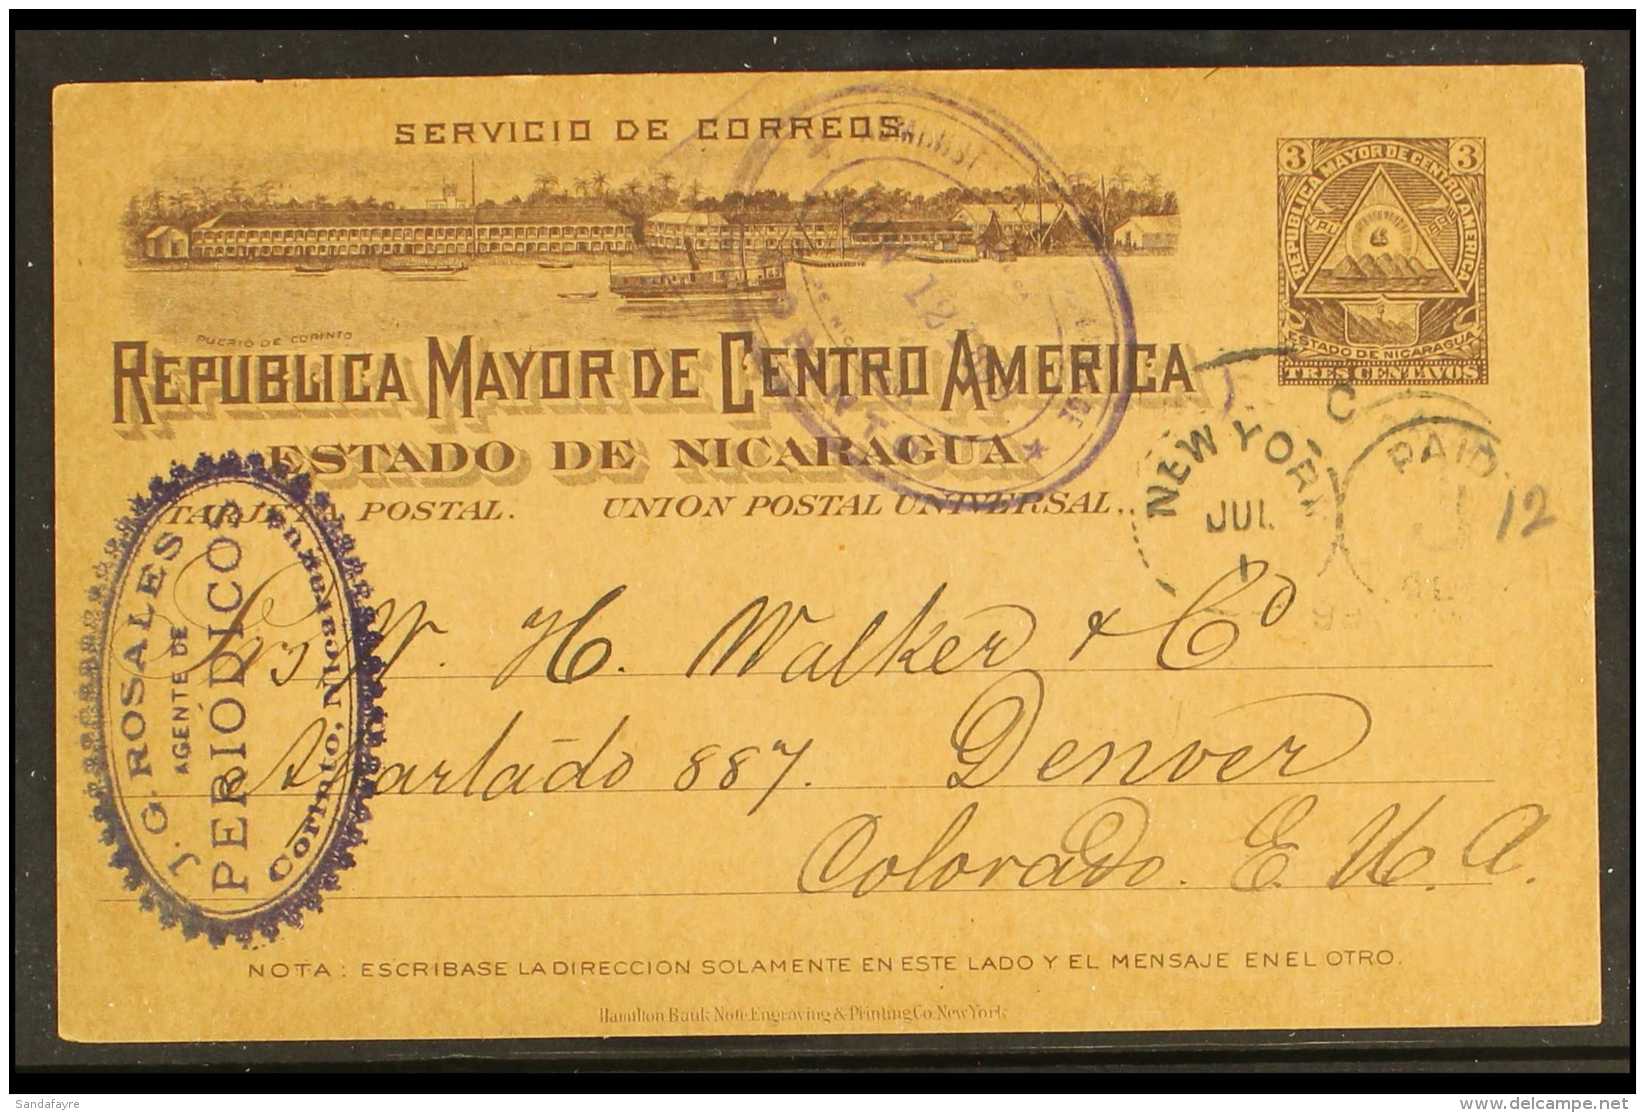 POSTAL STATIONERY 1899 3c Grey Postal Stationery Card To Colorado, USA, With Violet Oval CORINTO Postmark, New... - Nicaragua